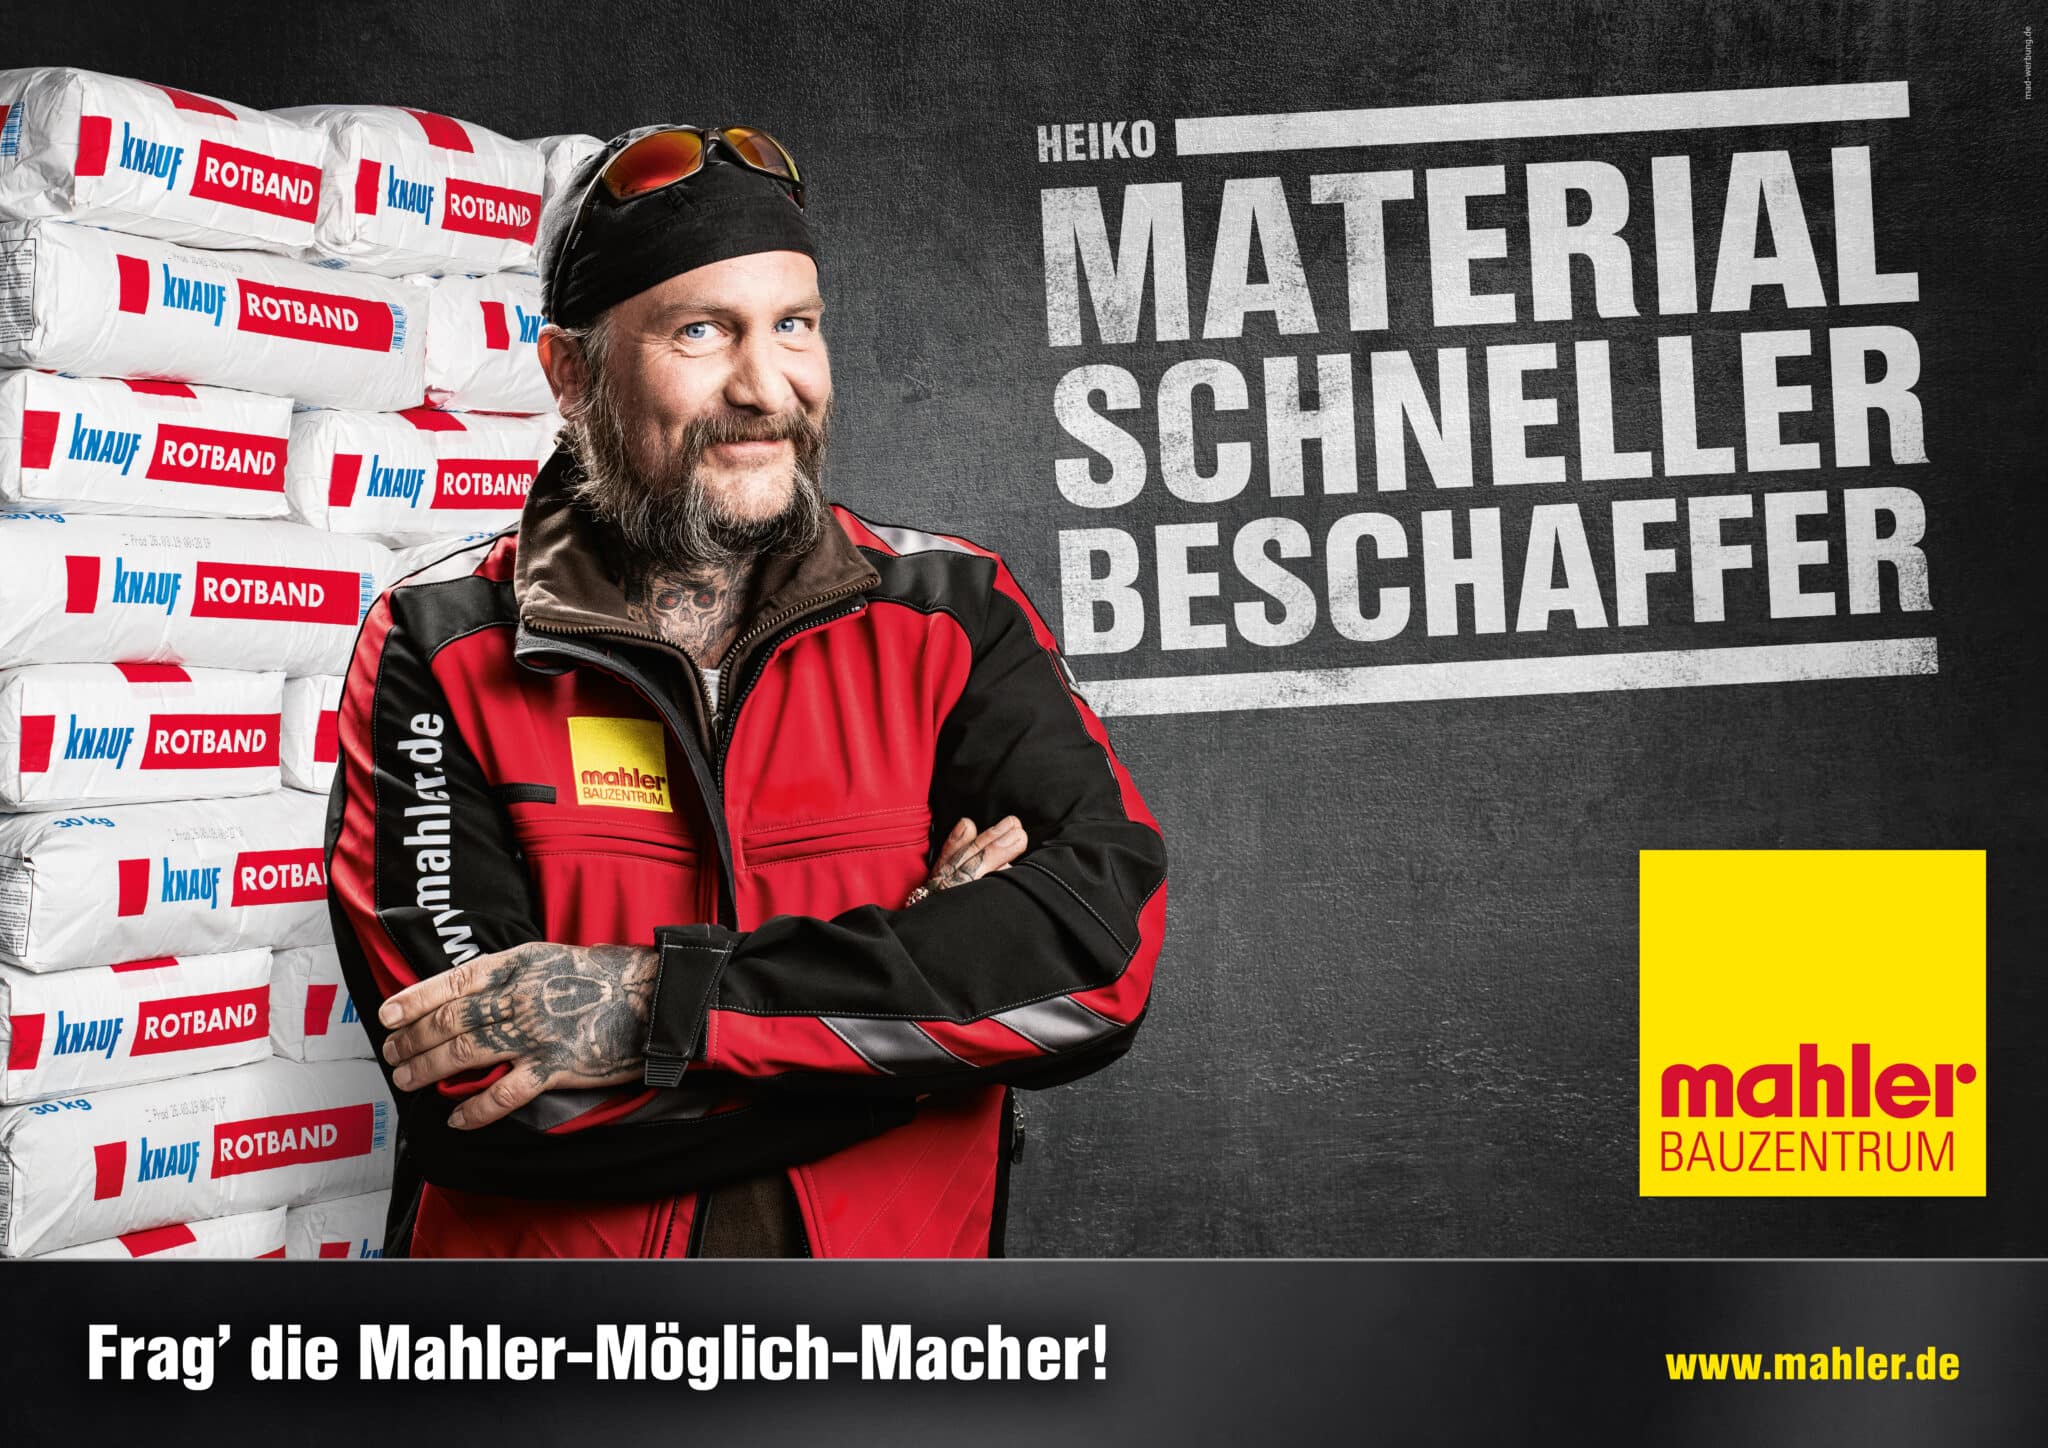 Mahler_Image-Kampagne_GF-5